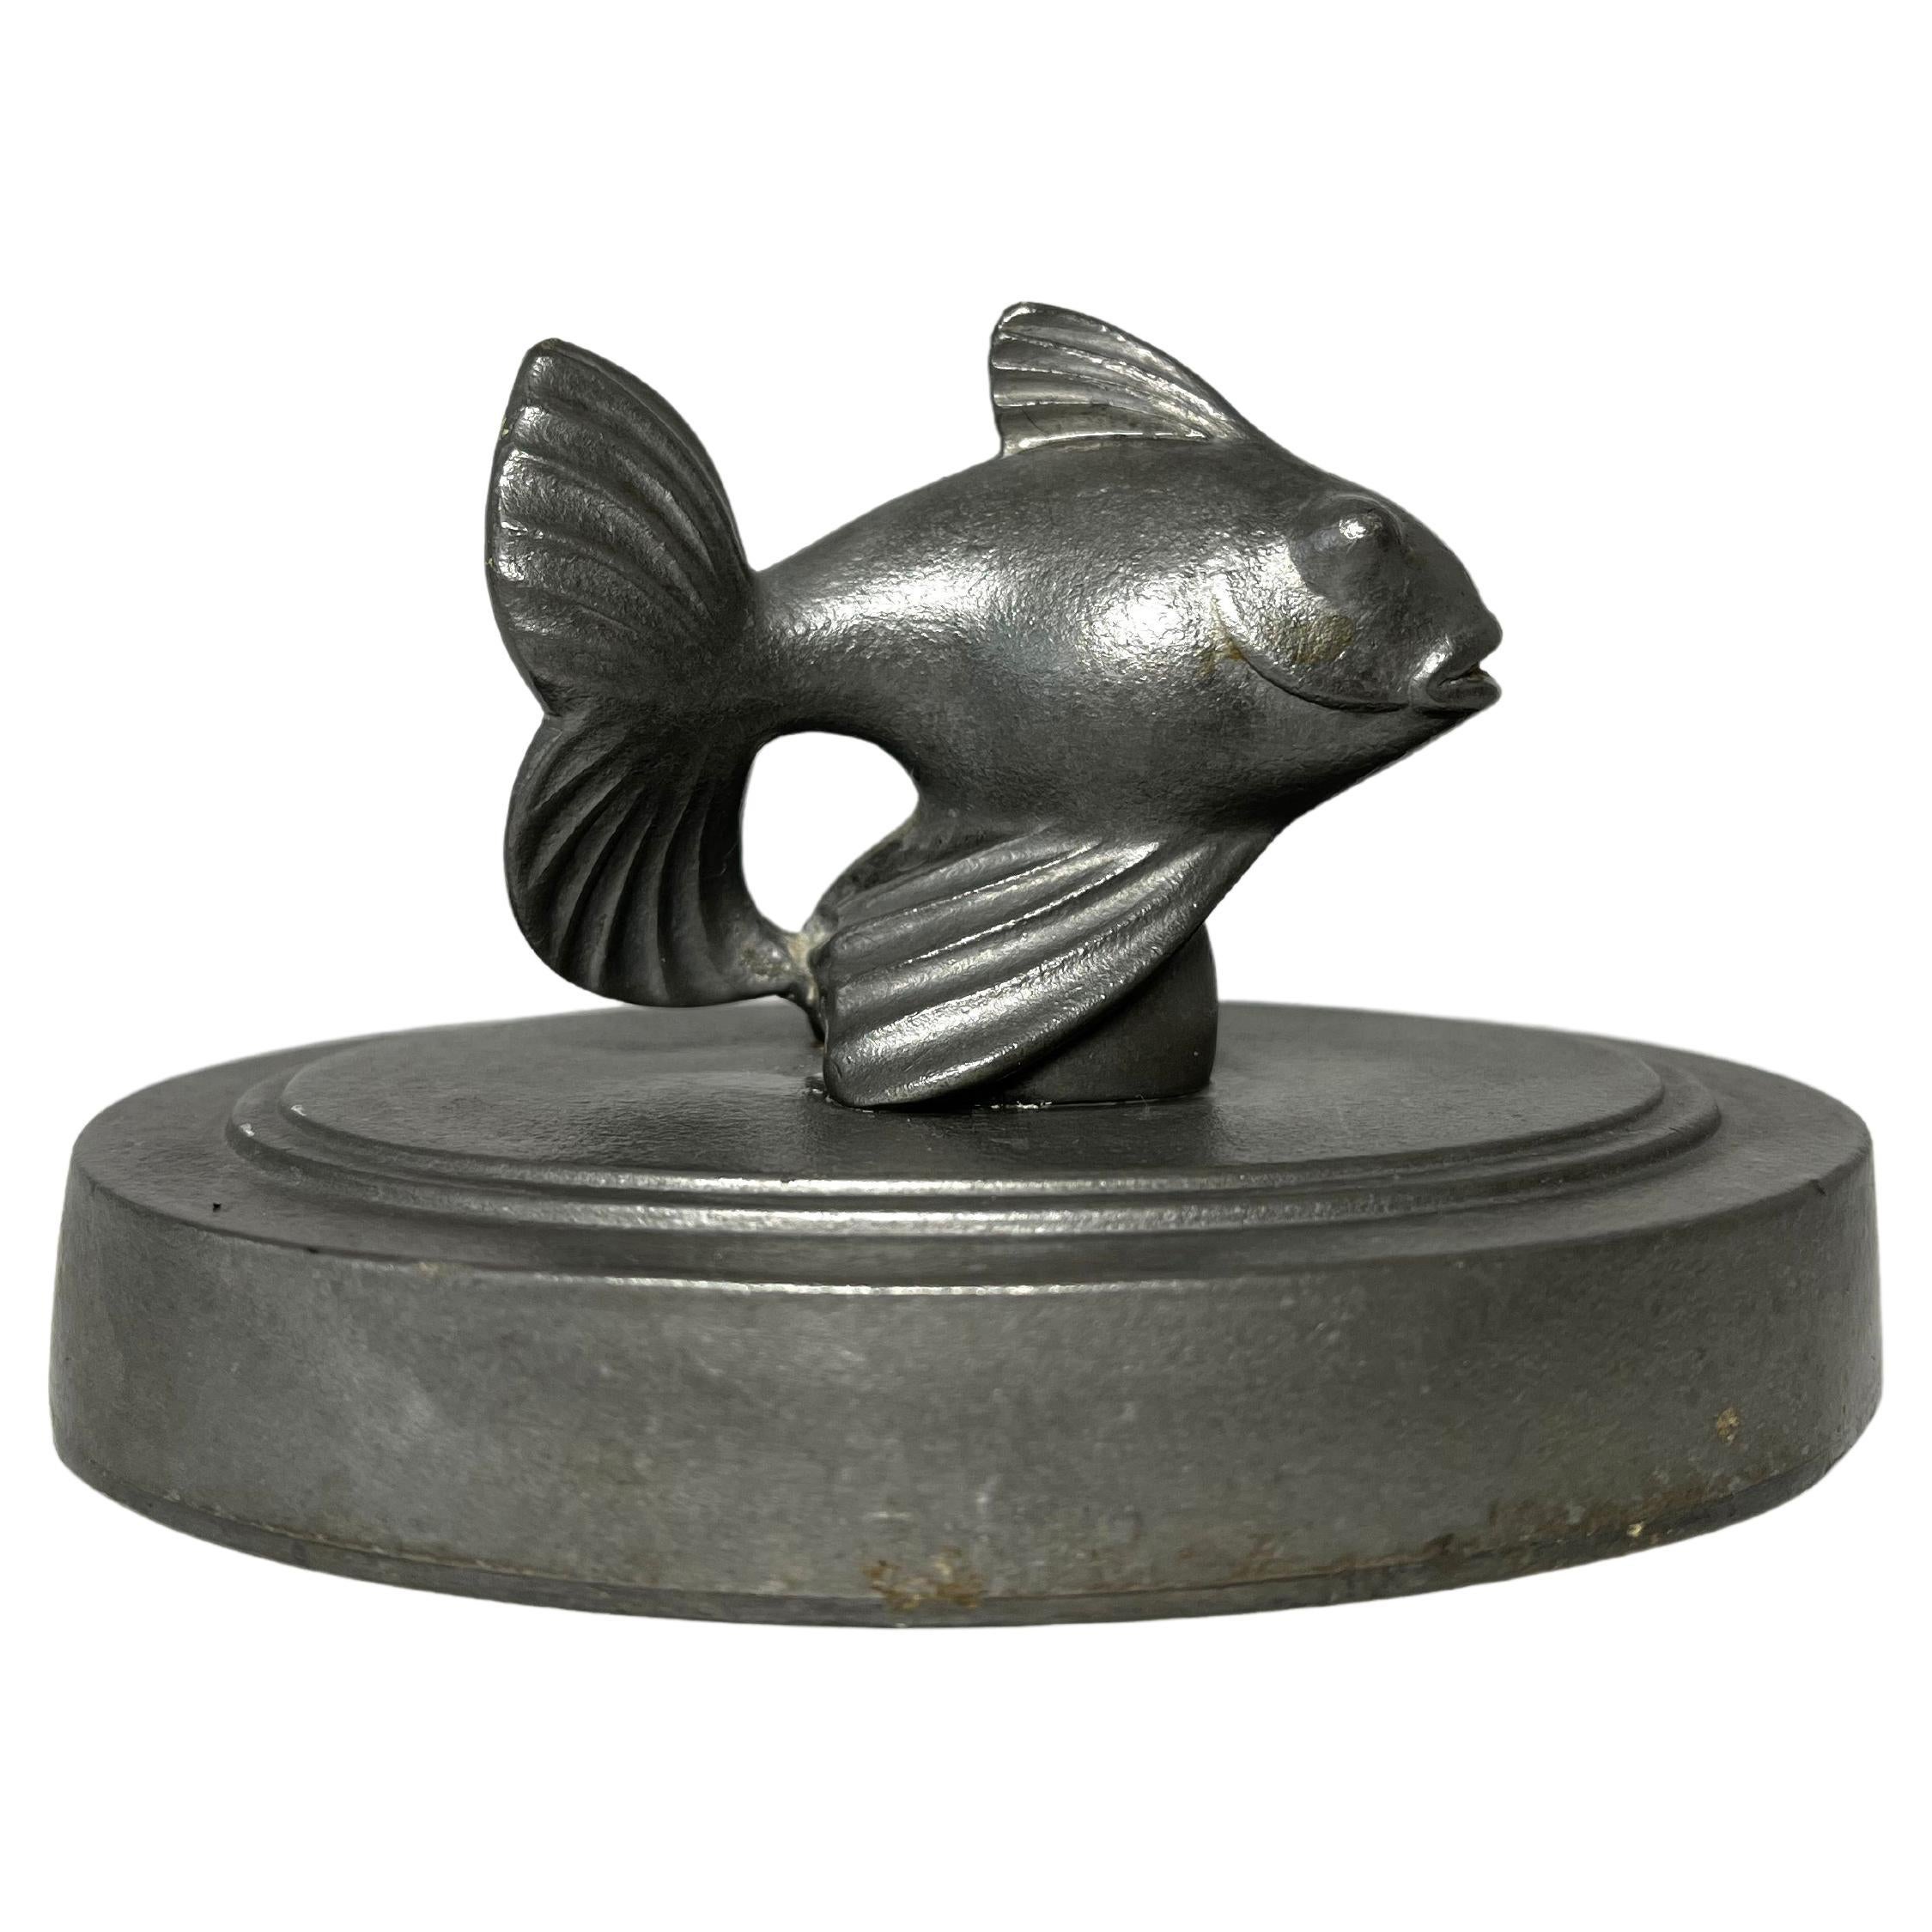 Just Andersen, Denmark Fantail Fish 1920s Art Deco Pewter Desk Paperweight #833B